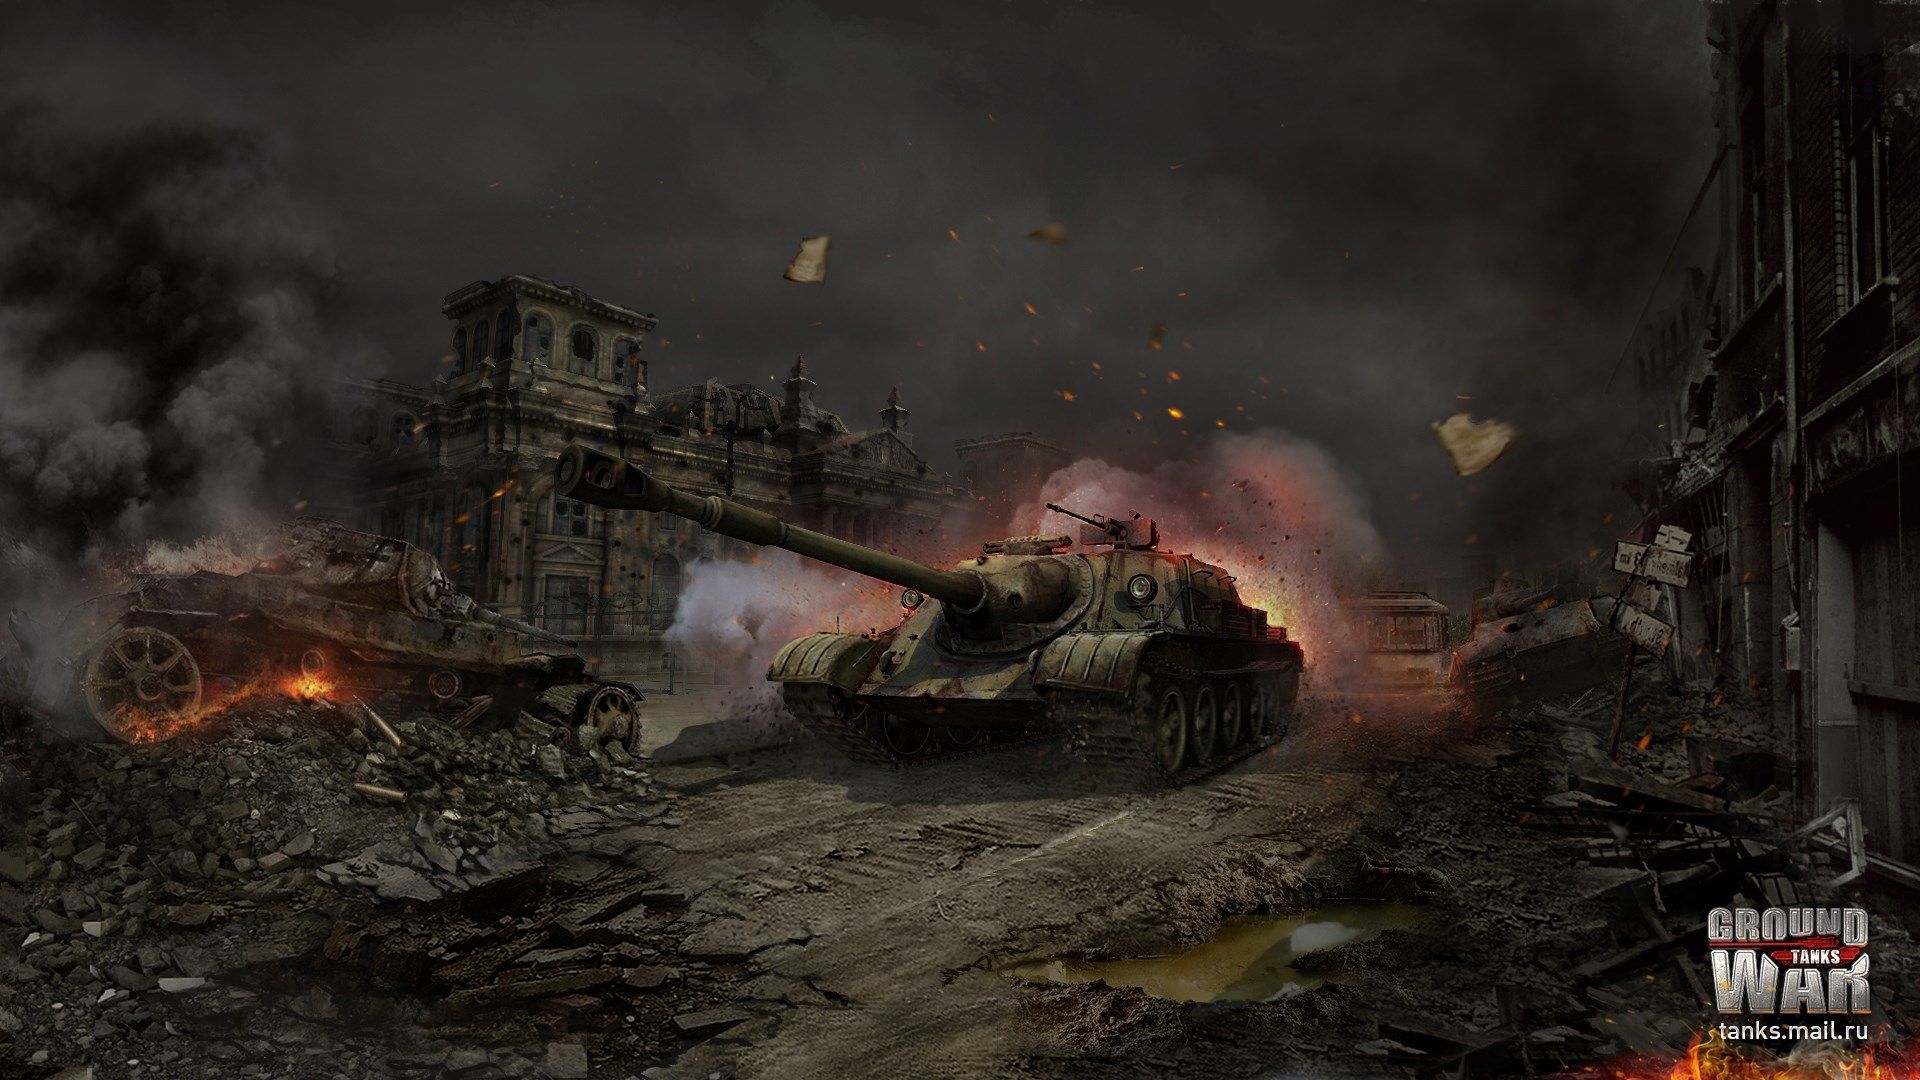 px Ground War: Tanks wallpaper: Wallpaper Collection